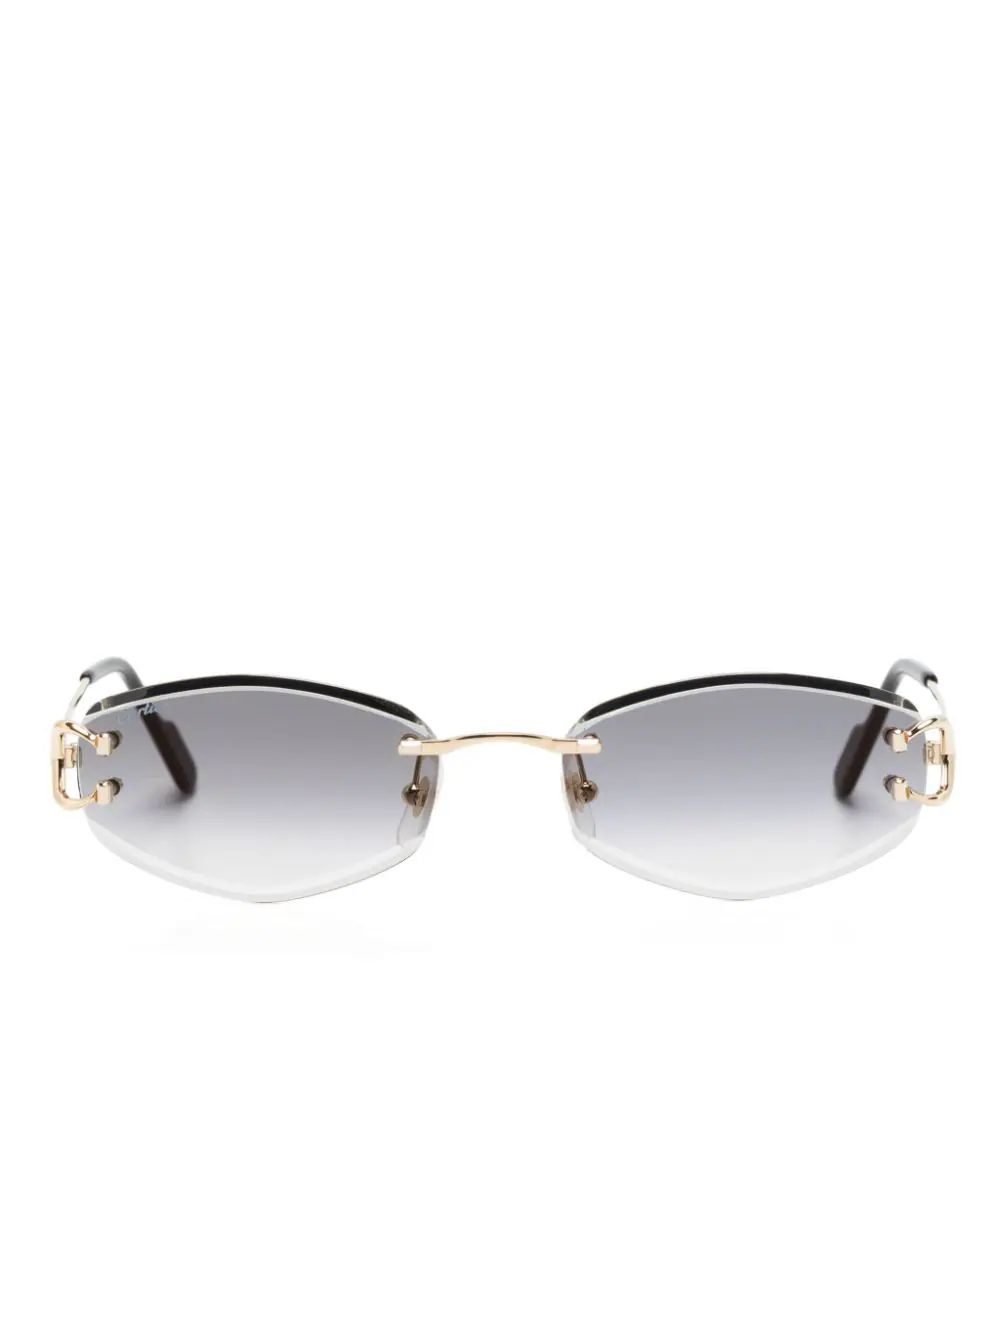 oval-frame sunglasses | Farfetch Global